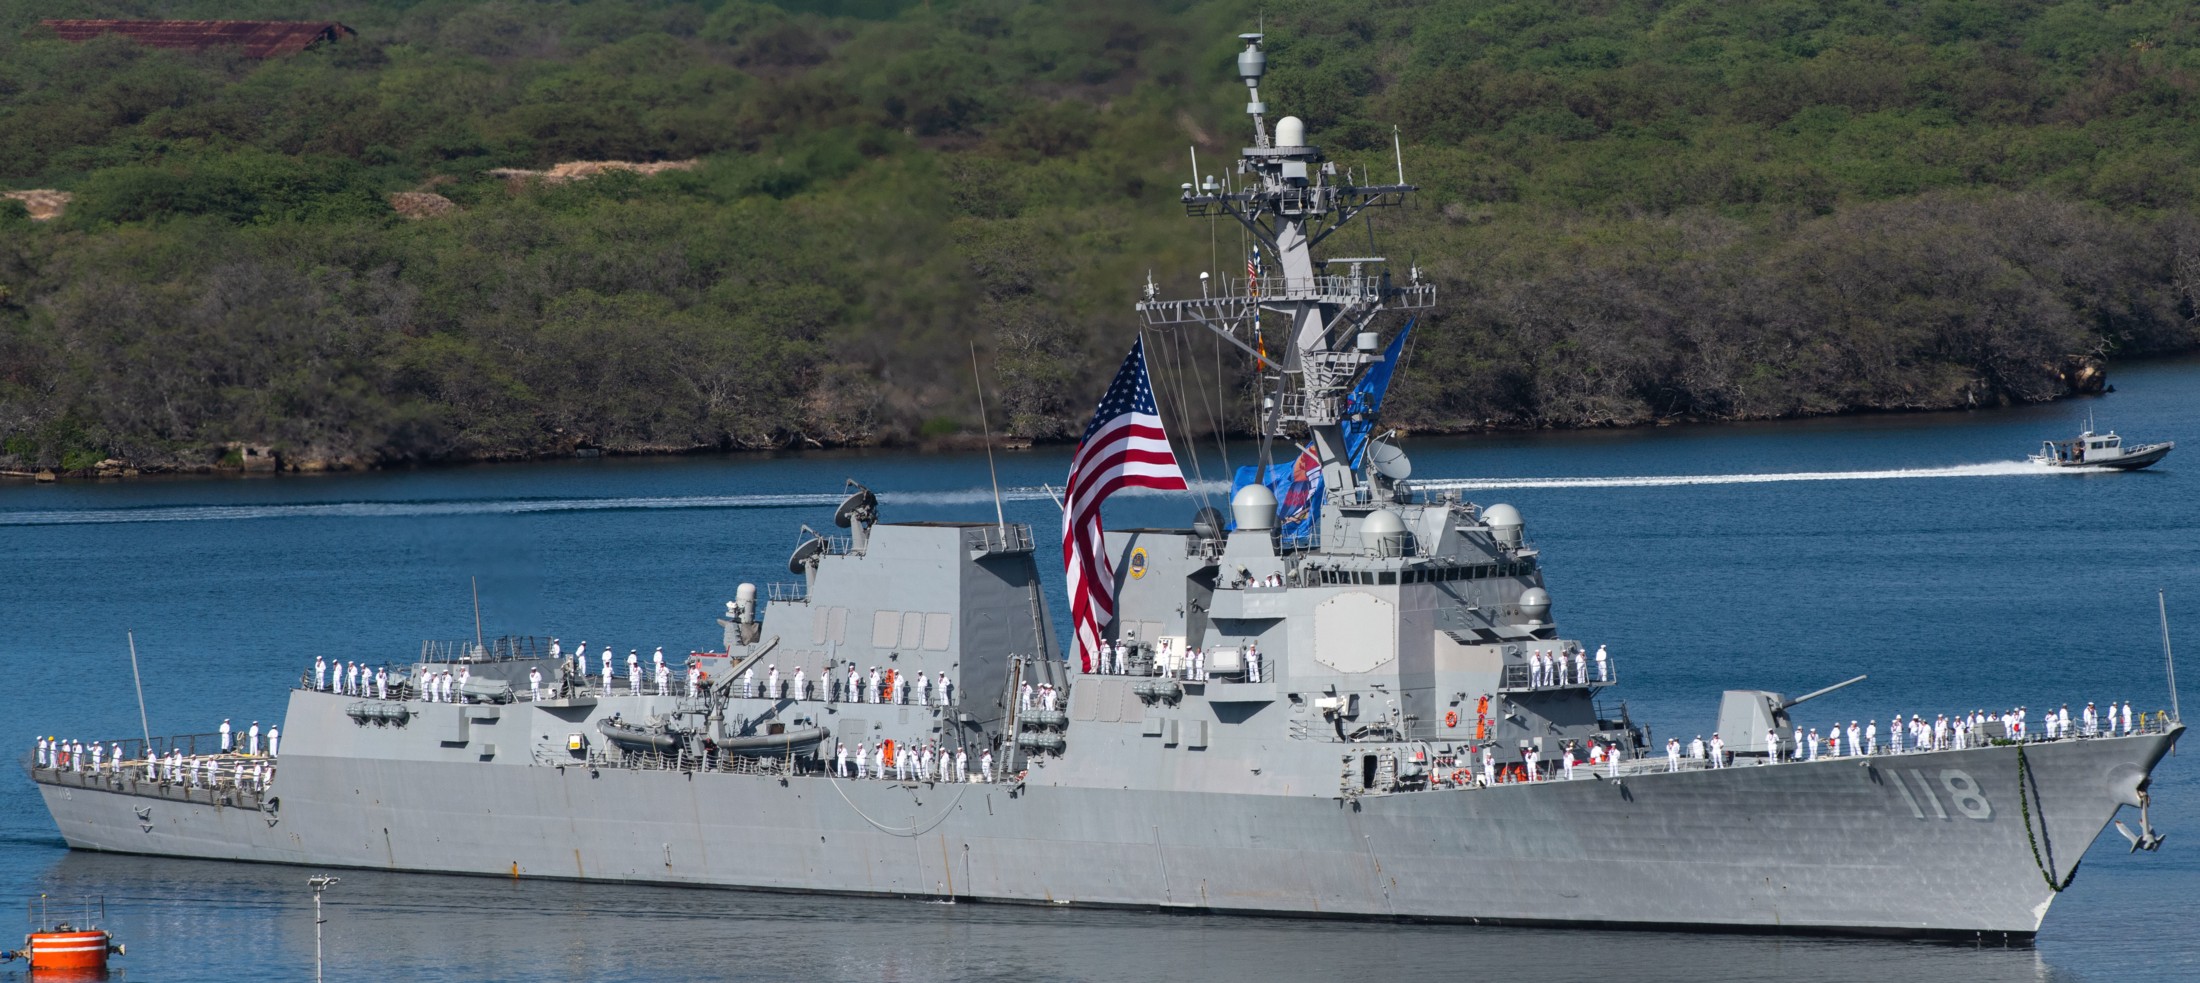 ddg-118 uss daniel inouye arleigh burke class guided missile destroyer us navy aegis bath gdbiw 18 pearl harbor hawaii